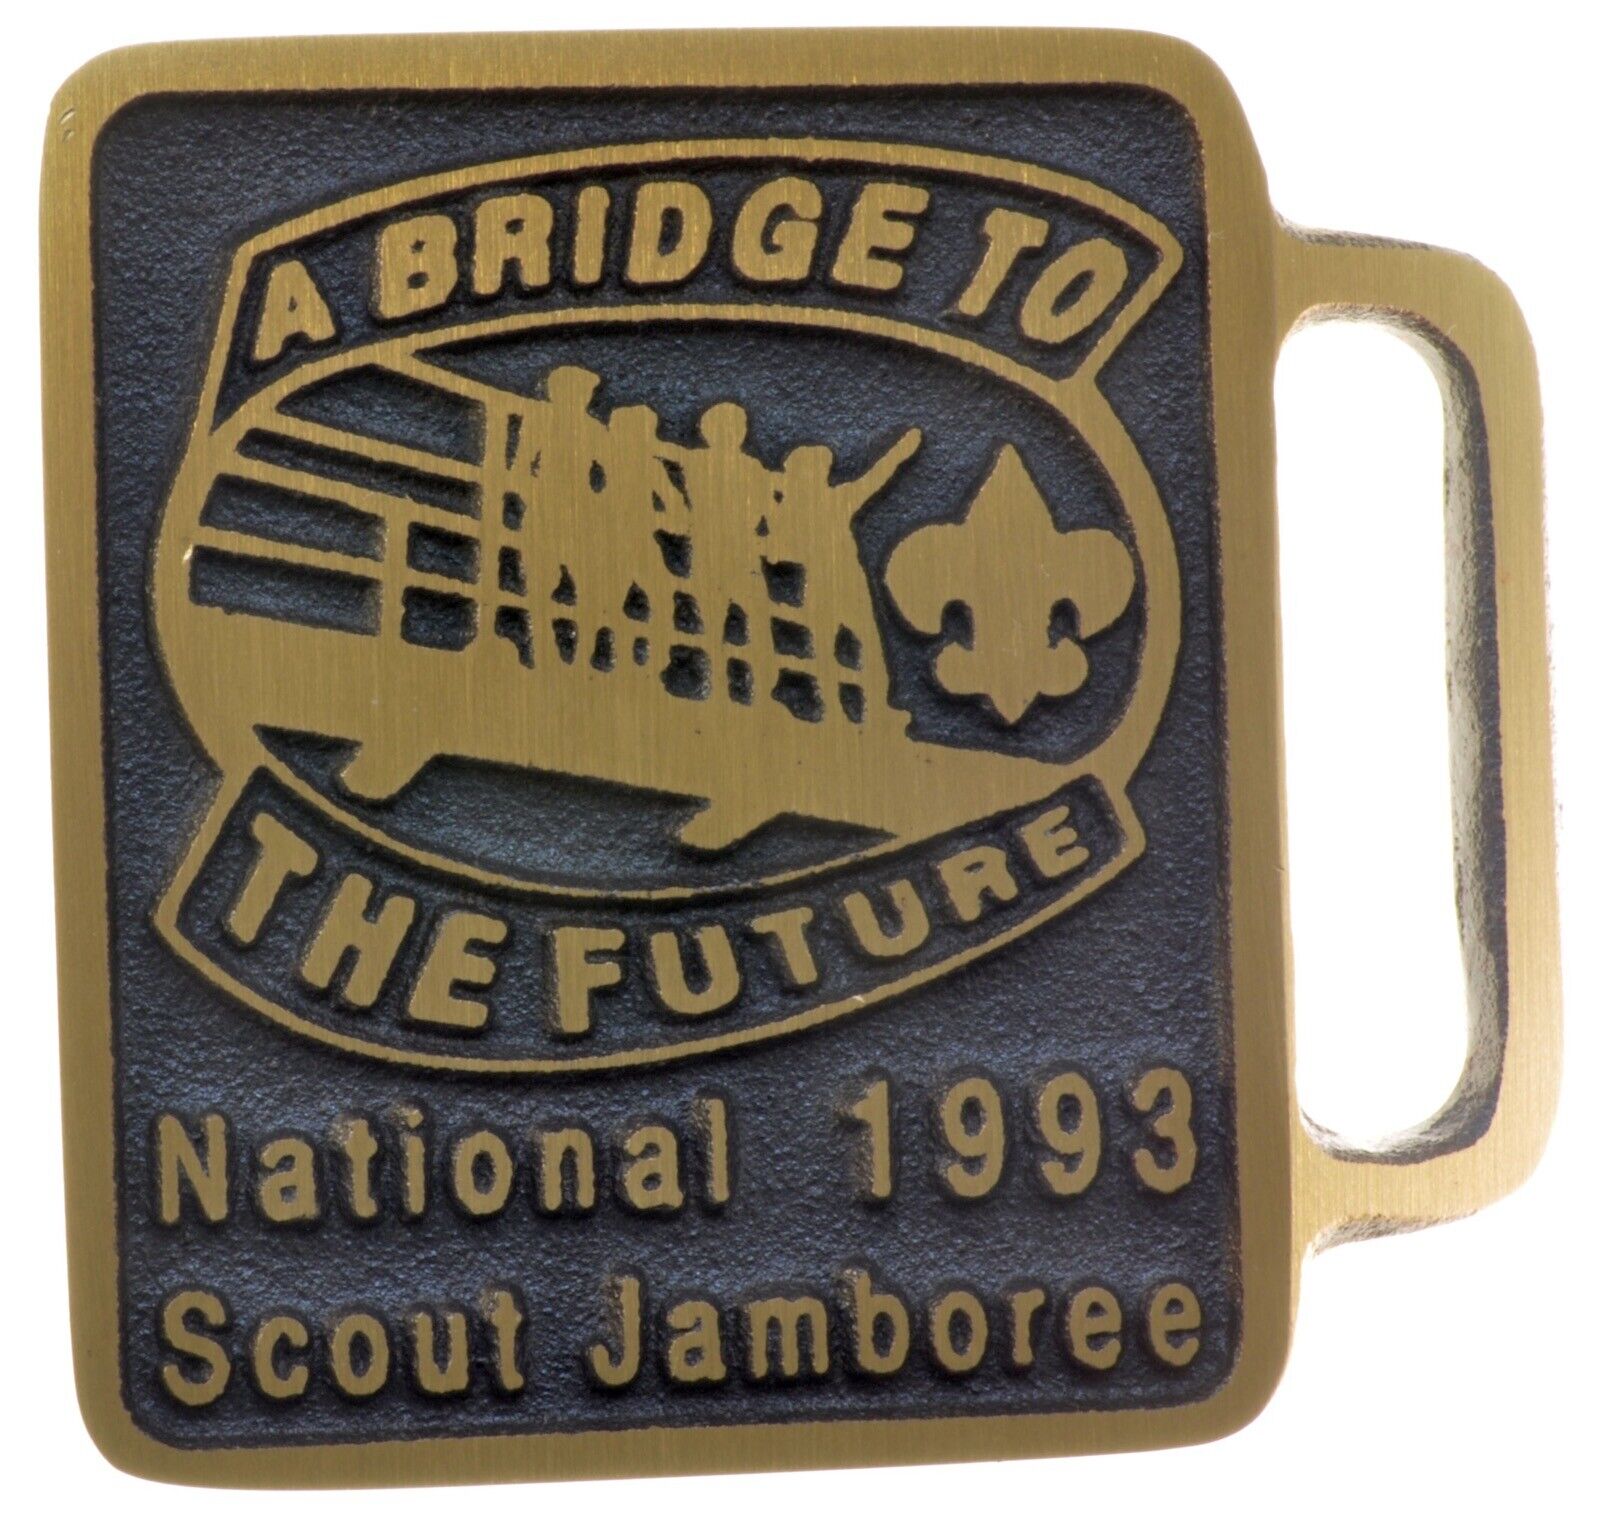 Max Silber 1993 National Jamboree Buckle - Mint